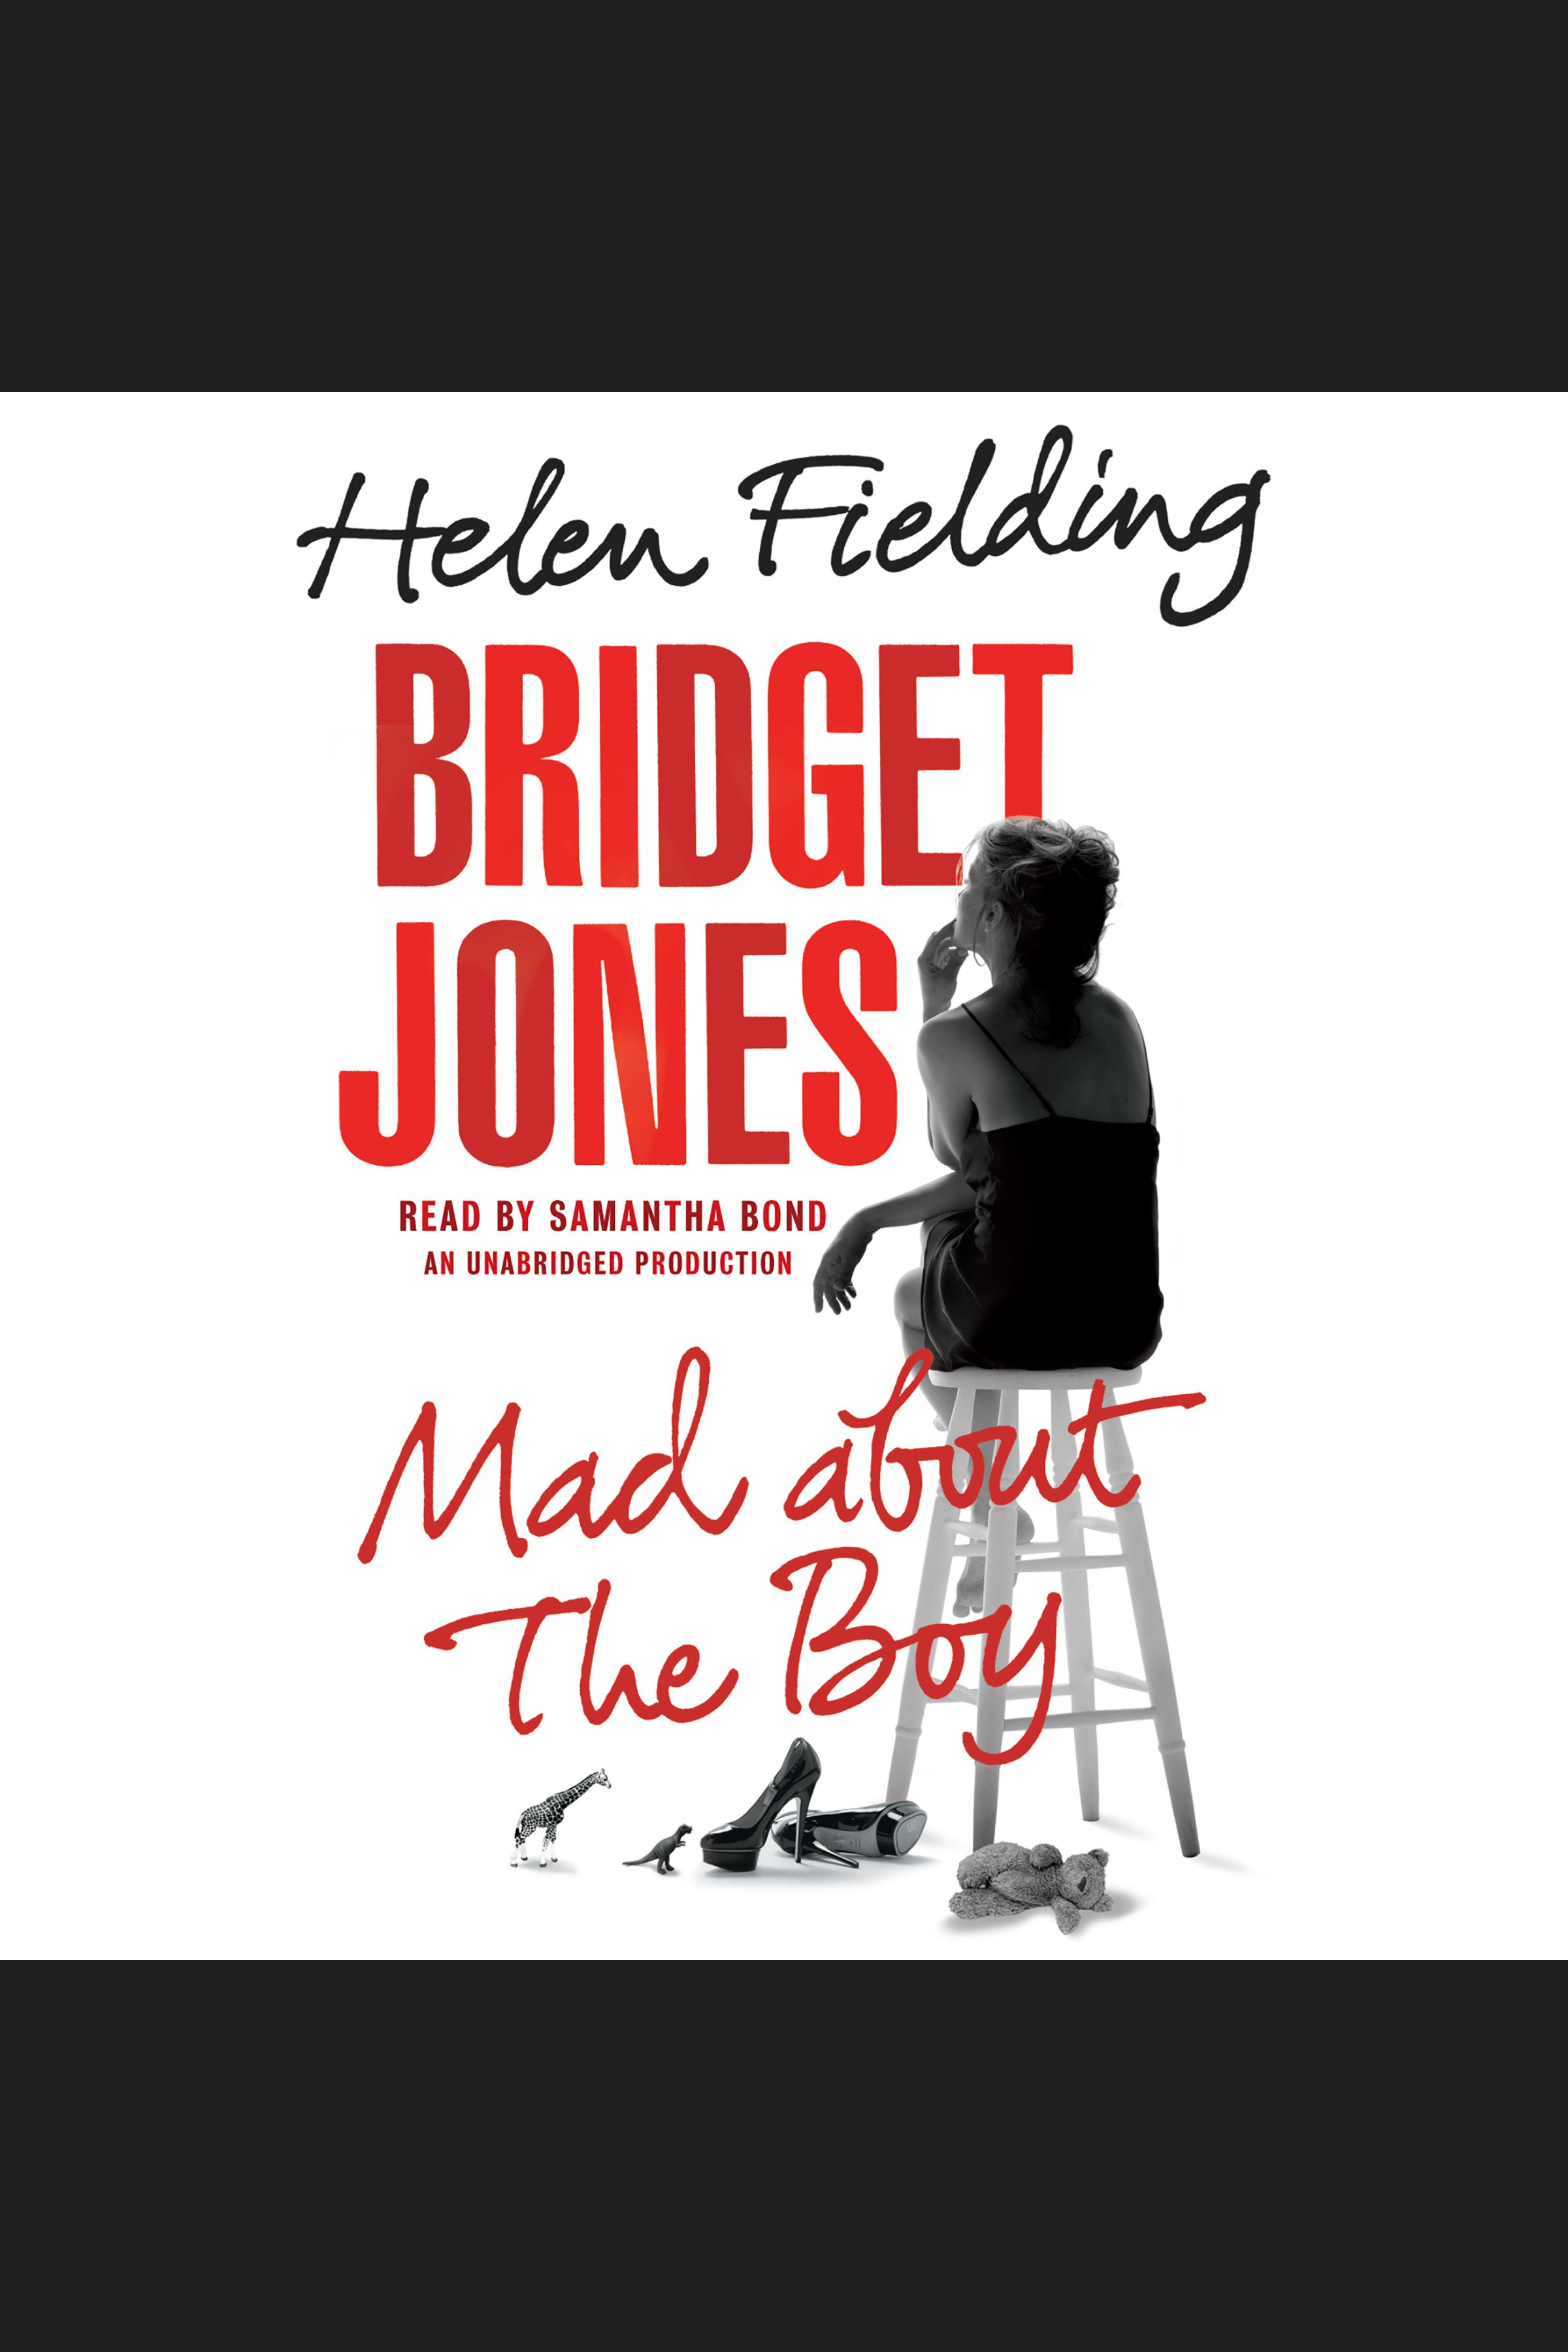 Bridget Jones mad about the boy cover image